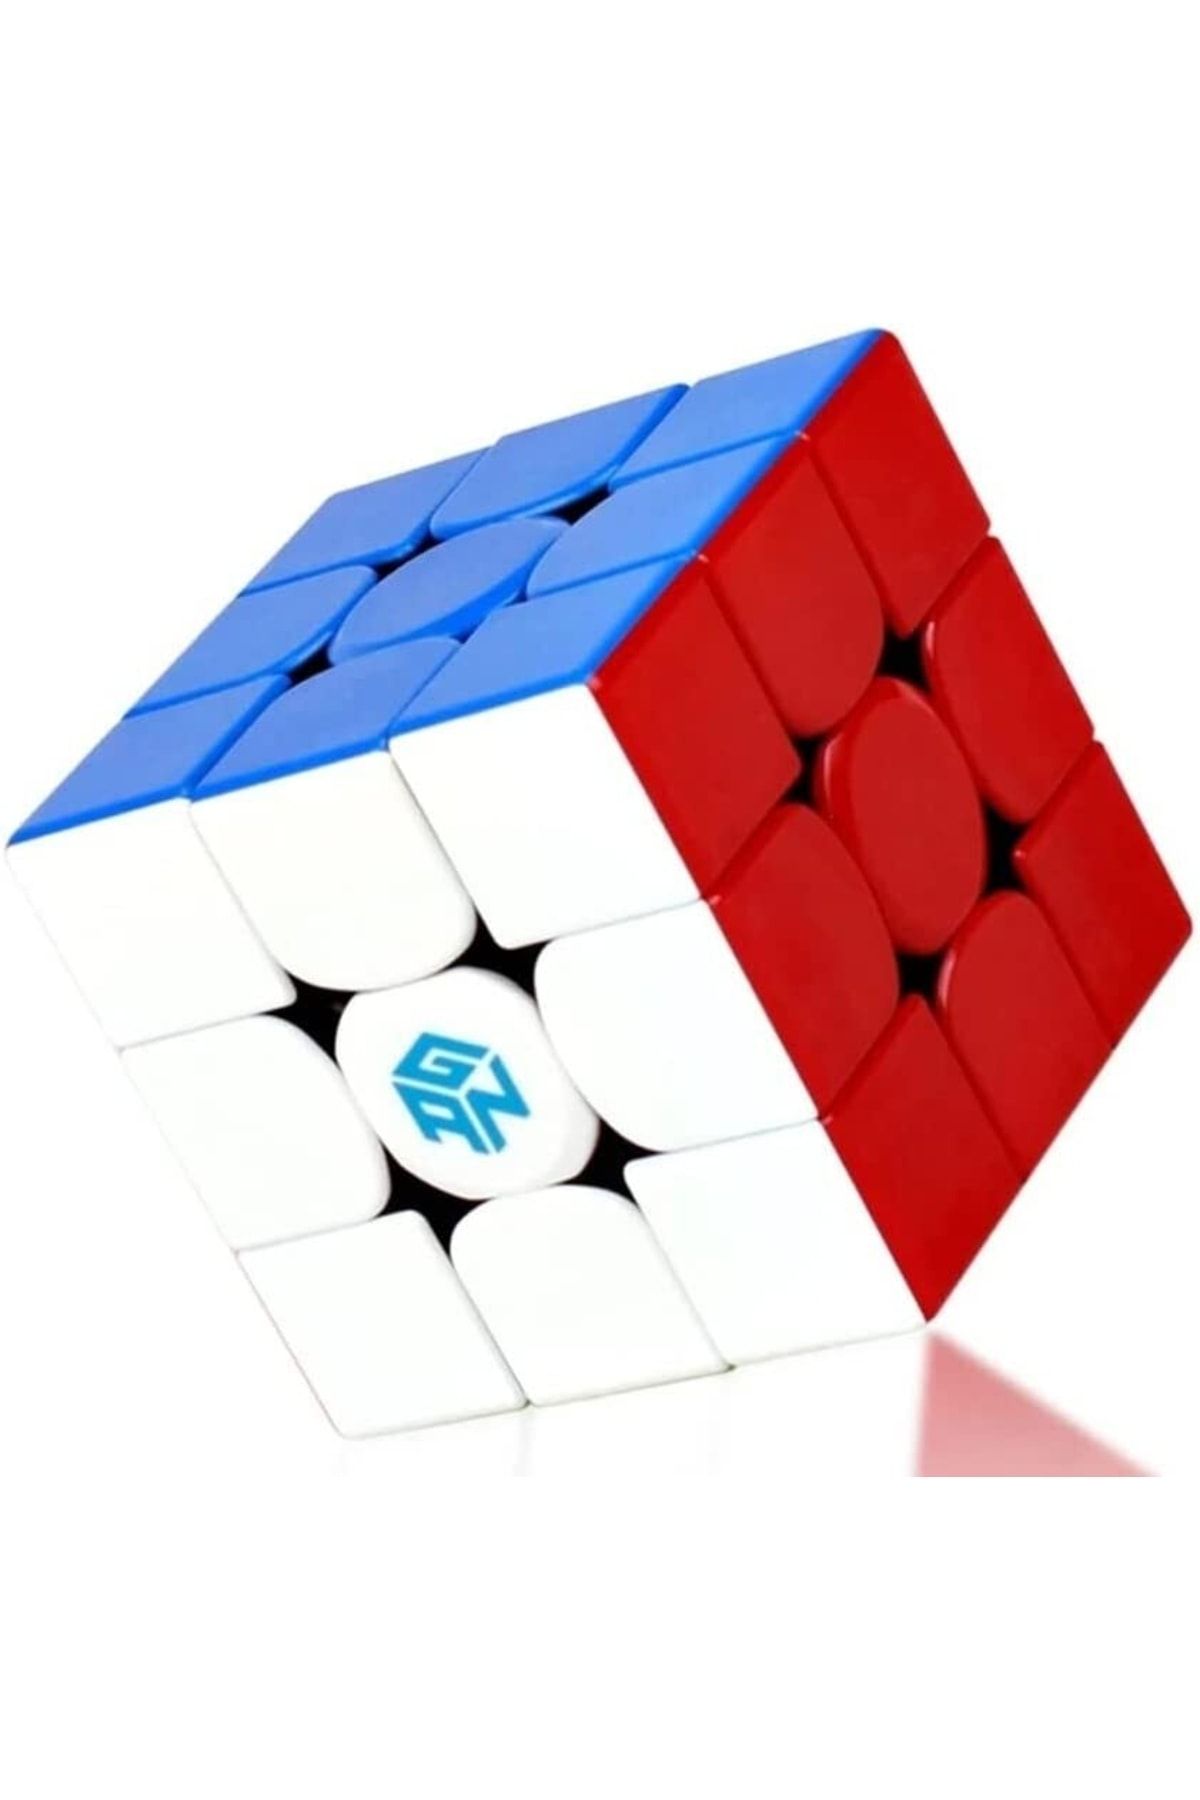 GAN 356 Rs 3x3 Profesyonel Rubik Küpü Stickerless Puzzle Speed Cube